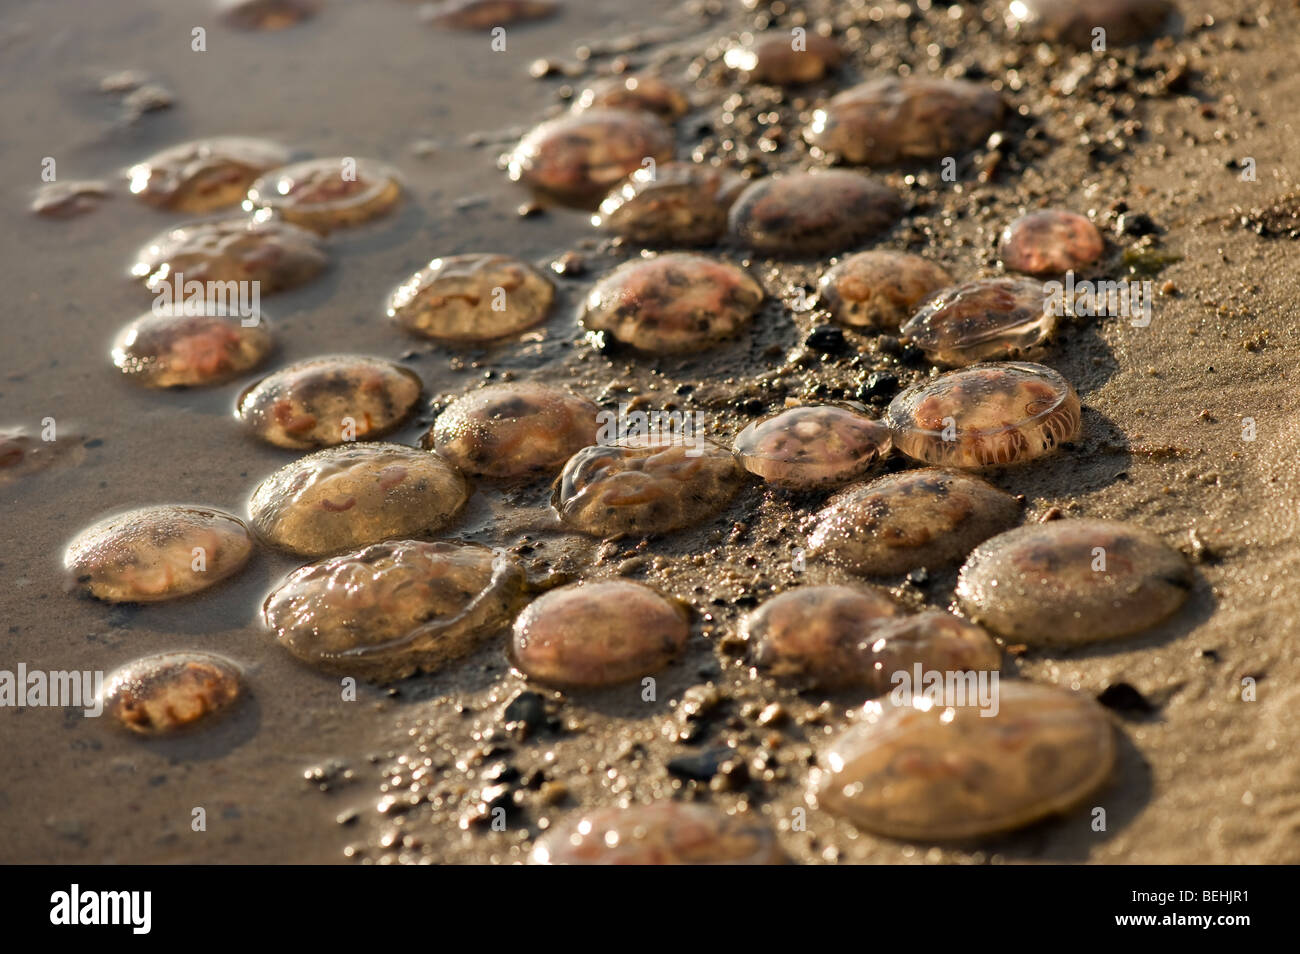 Moon jellyfishes, Aurelia aurita, on beach Stock Photo